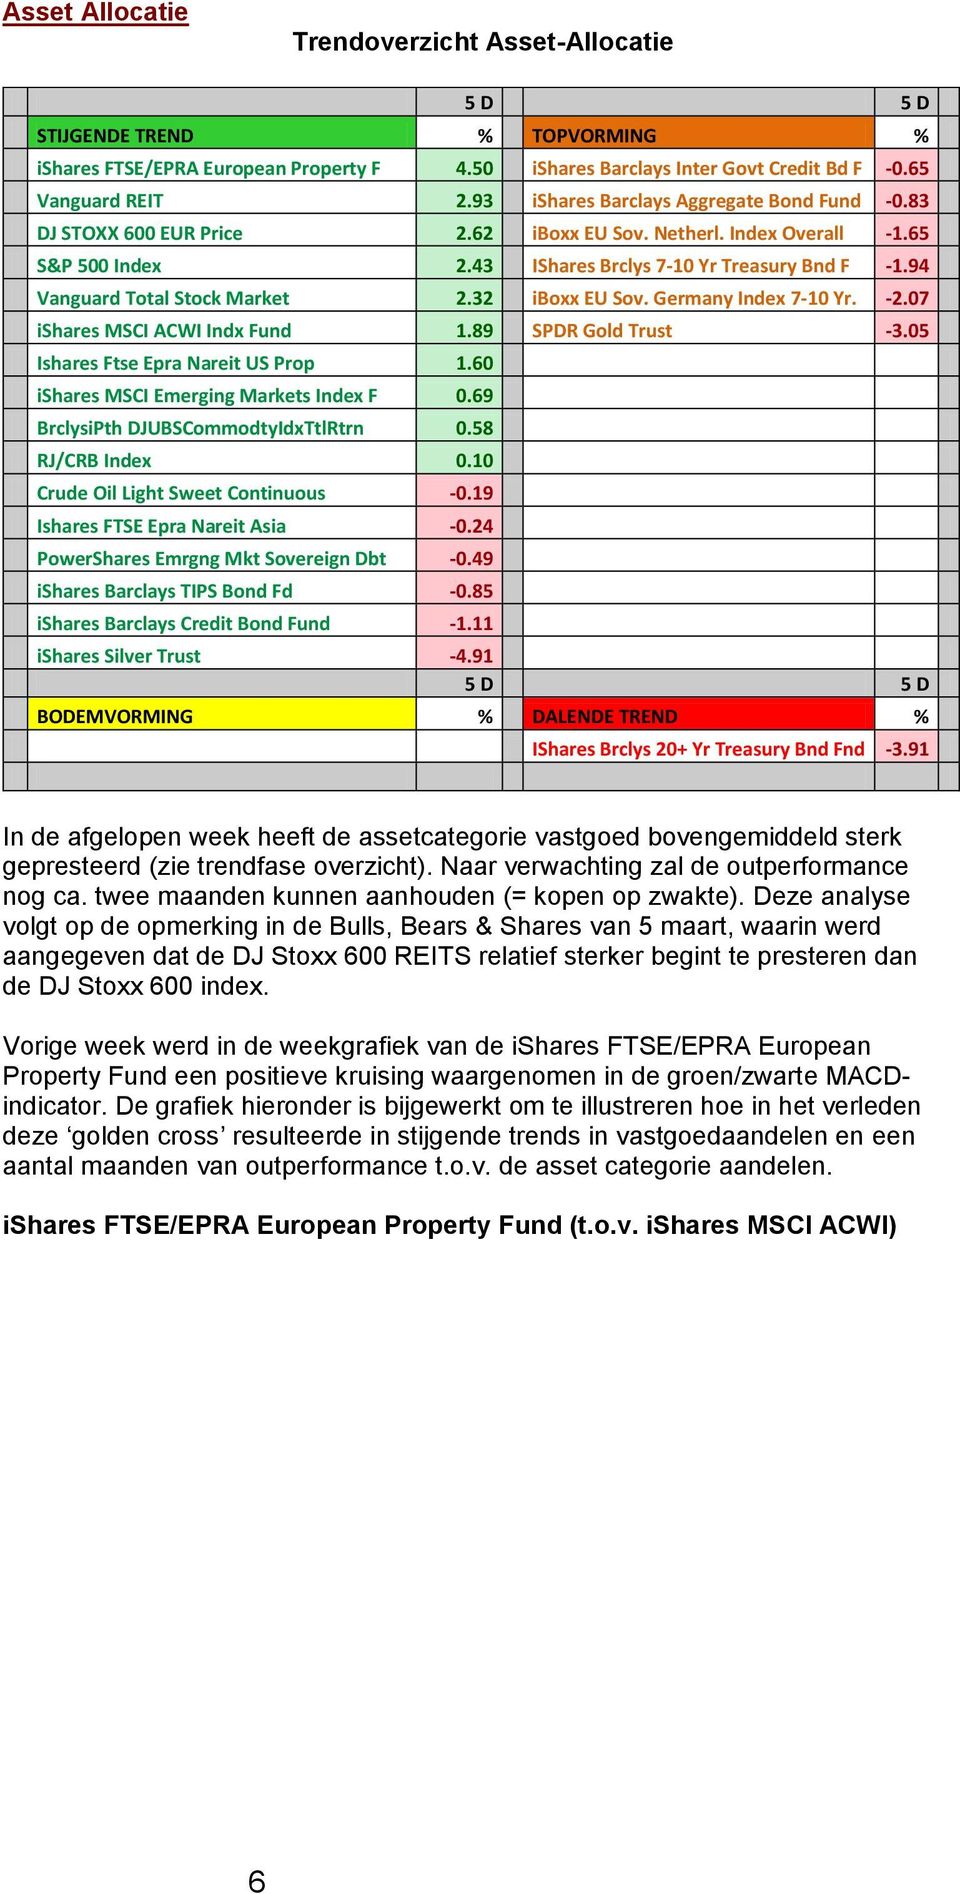 94 Vanguard Total Stock Market 2.32 iboxx EU Sov. Germany Index 7-10 Yr. -2.07 ishares MSCI ACWI Indx Fund 1.89 SPDR Gold Trust -3.05 Ishares Ftse Epra Nareit US Prop 1.